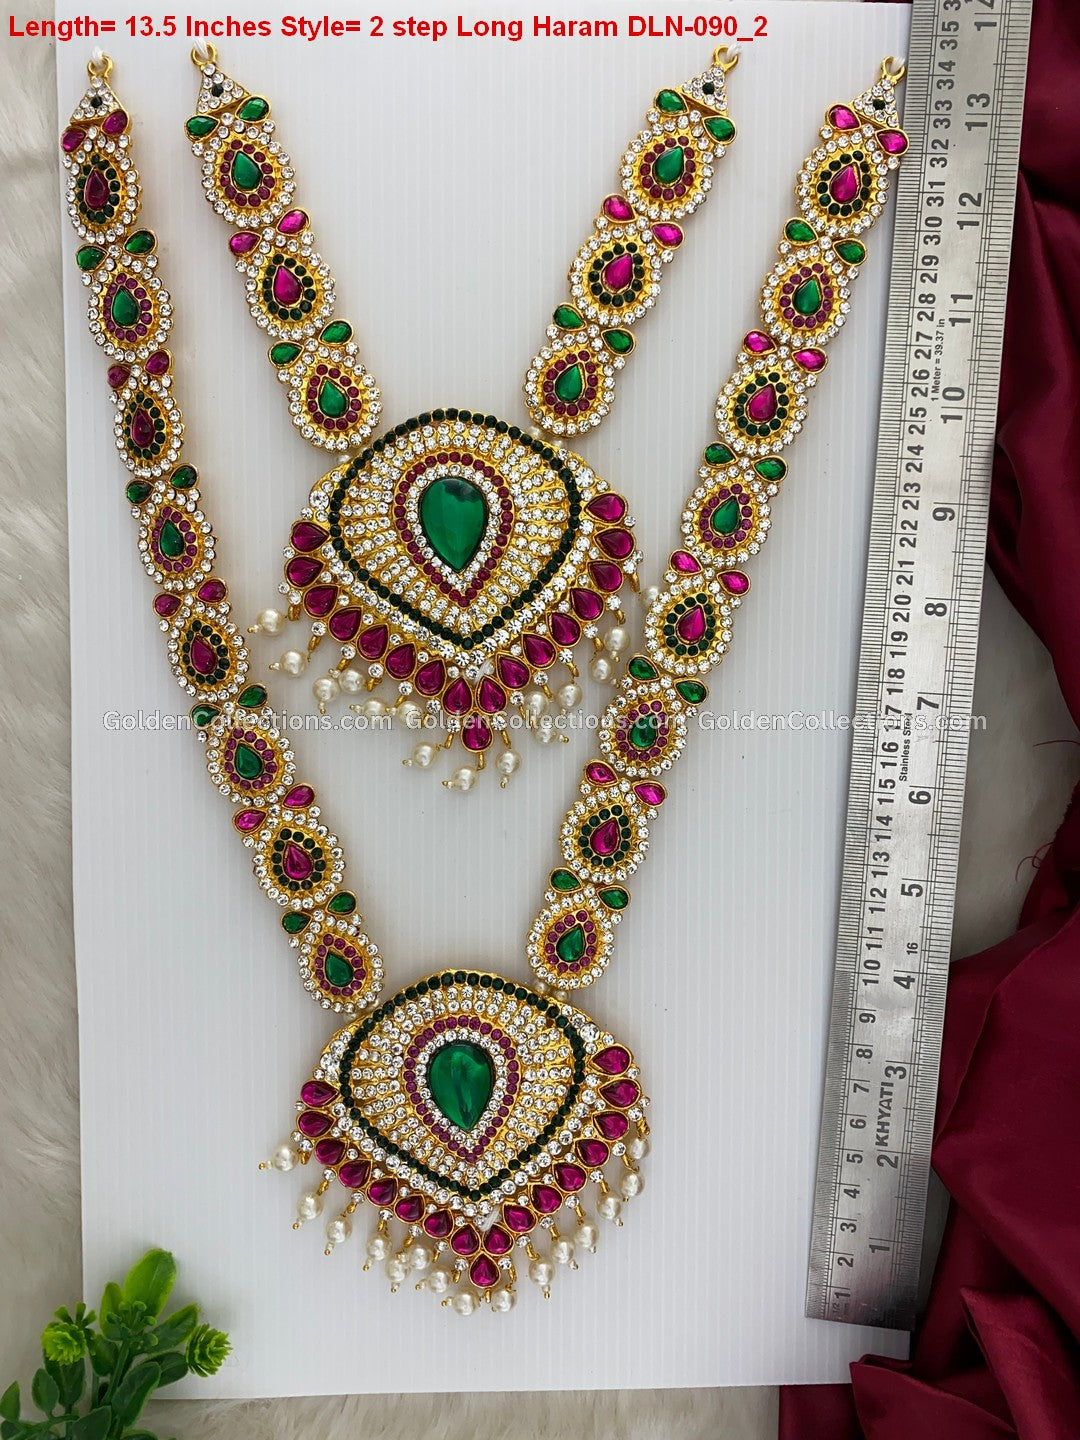 Divine Aura Long Haram - Hindu God Jewellery DLN-090 2